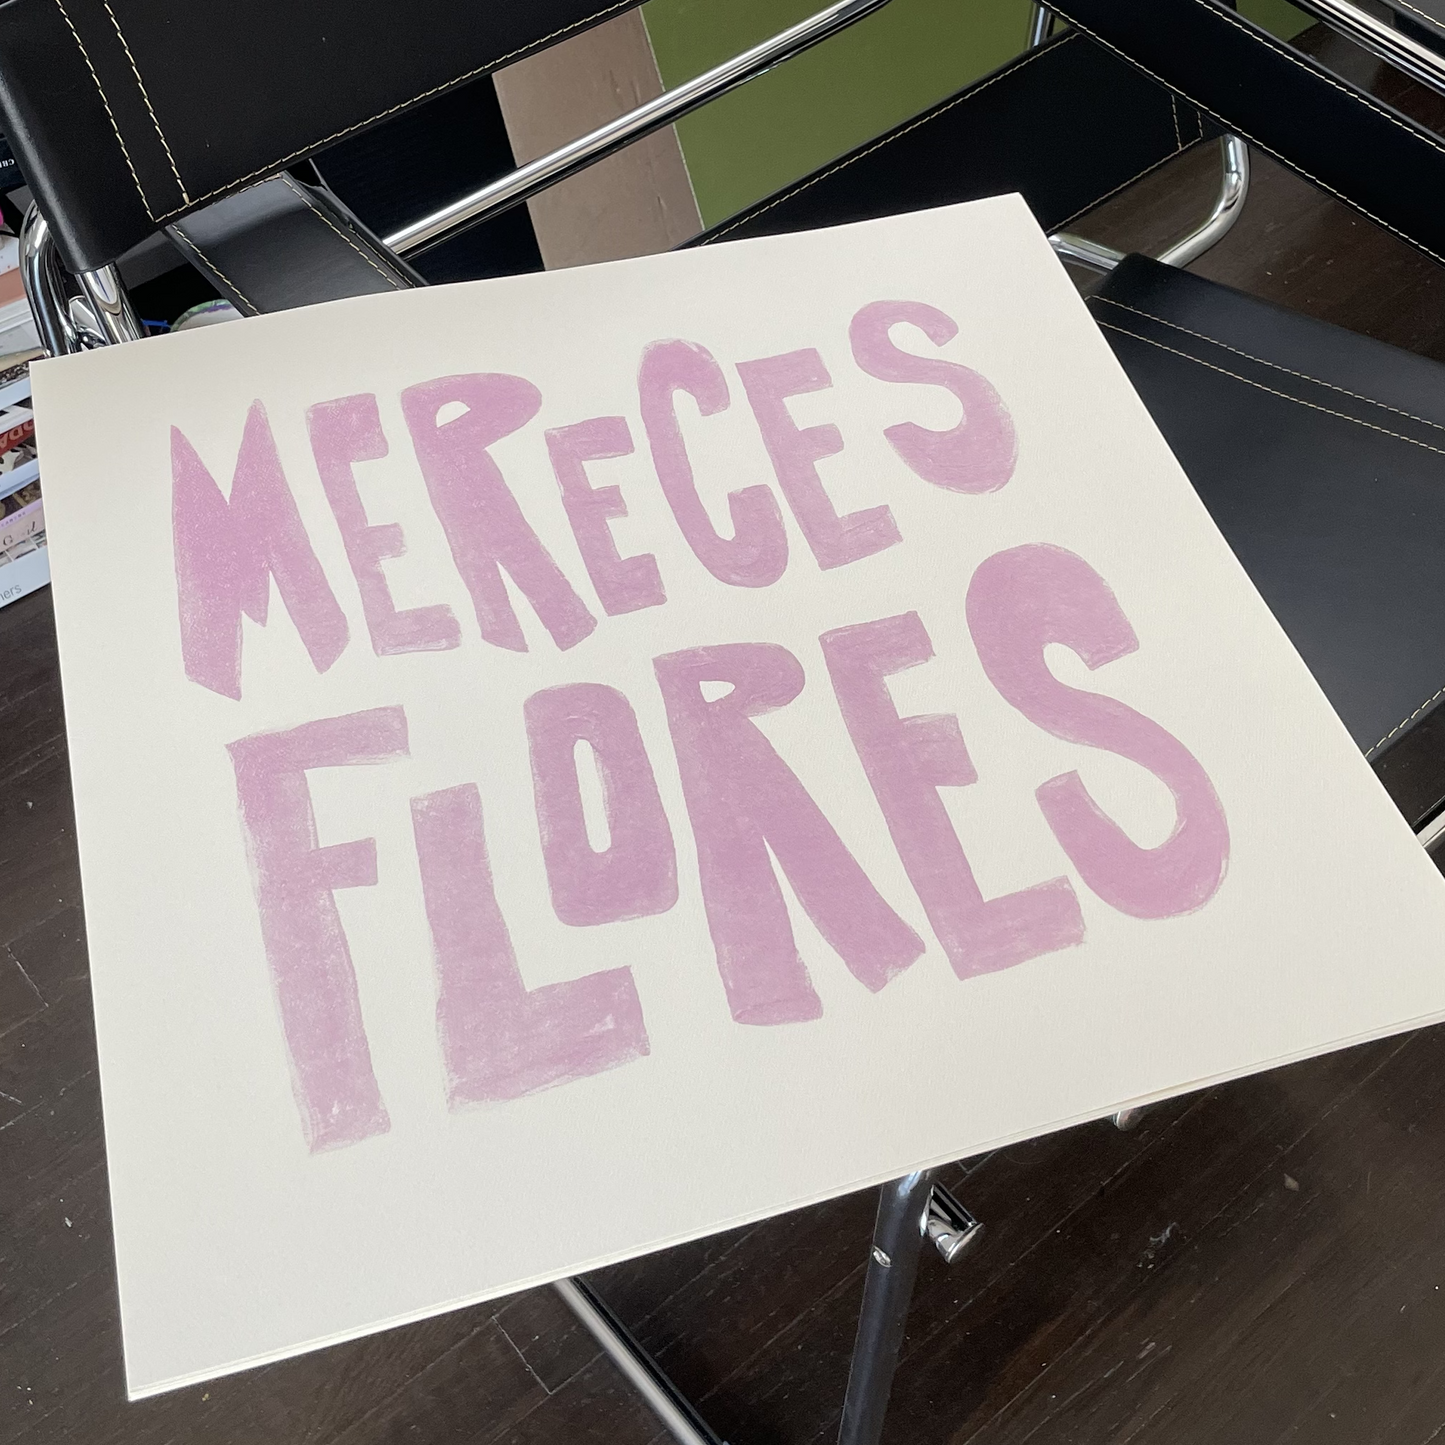 MERECES FLORECES